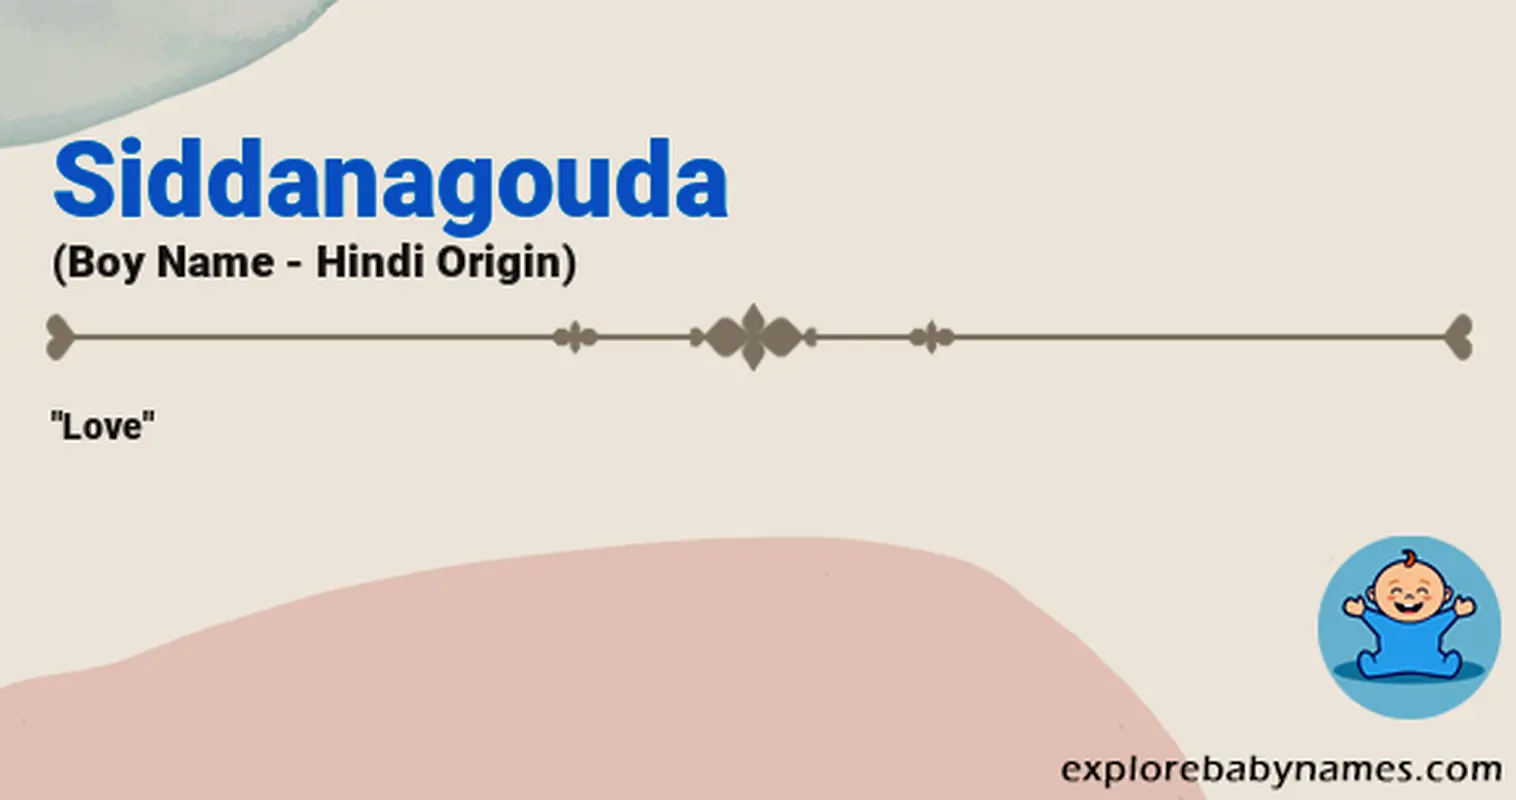 Meaning of Siddanagouda